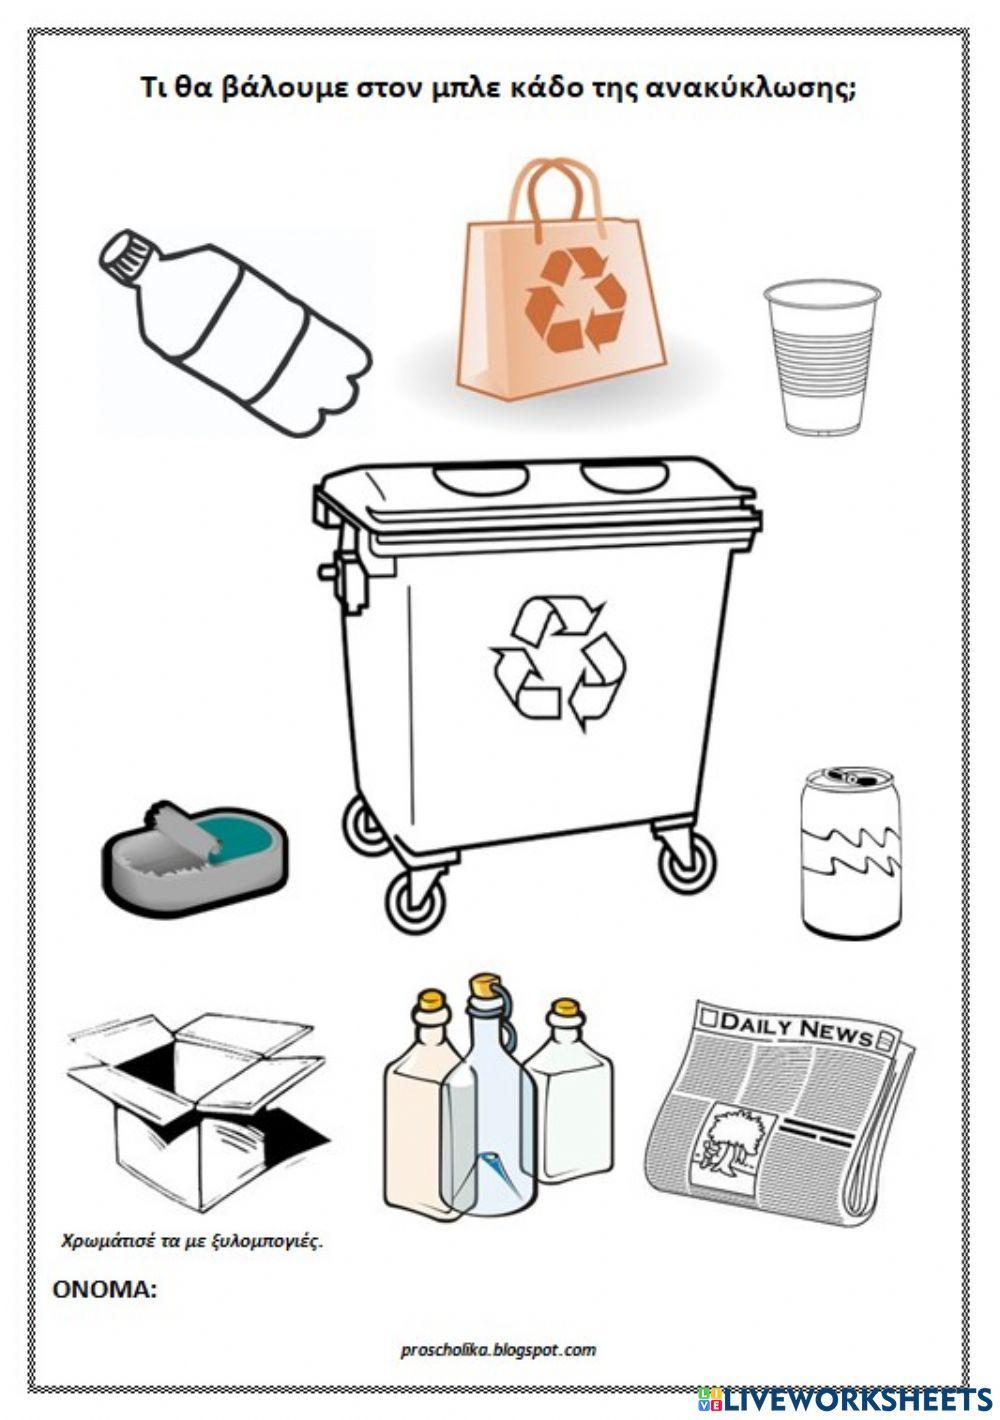 Recycling - ανακύκλωση